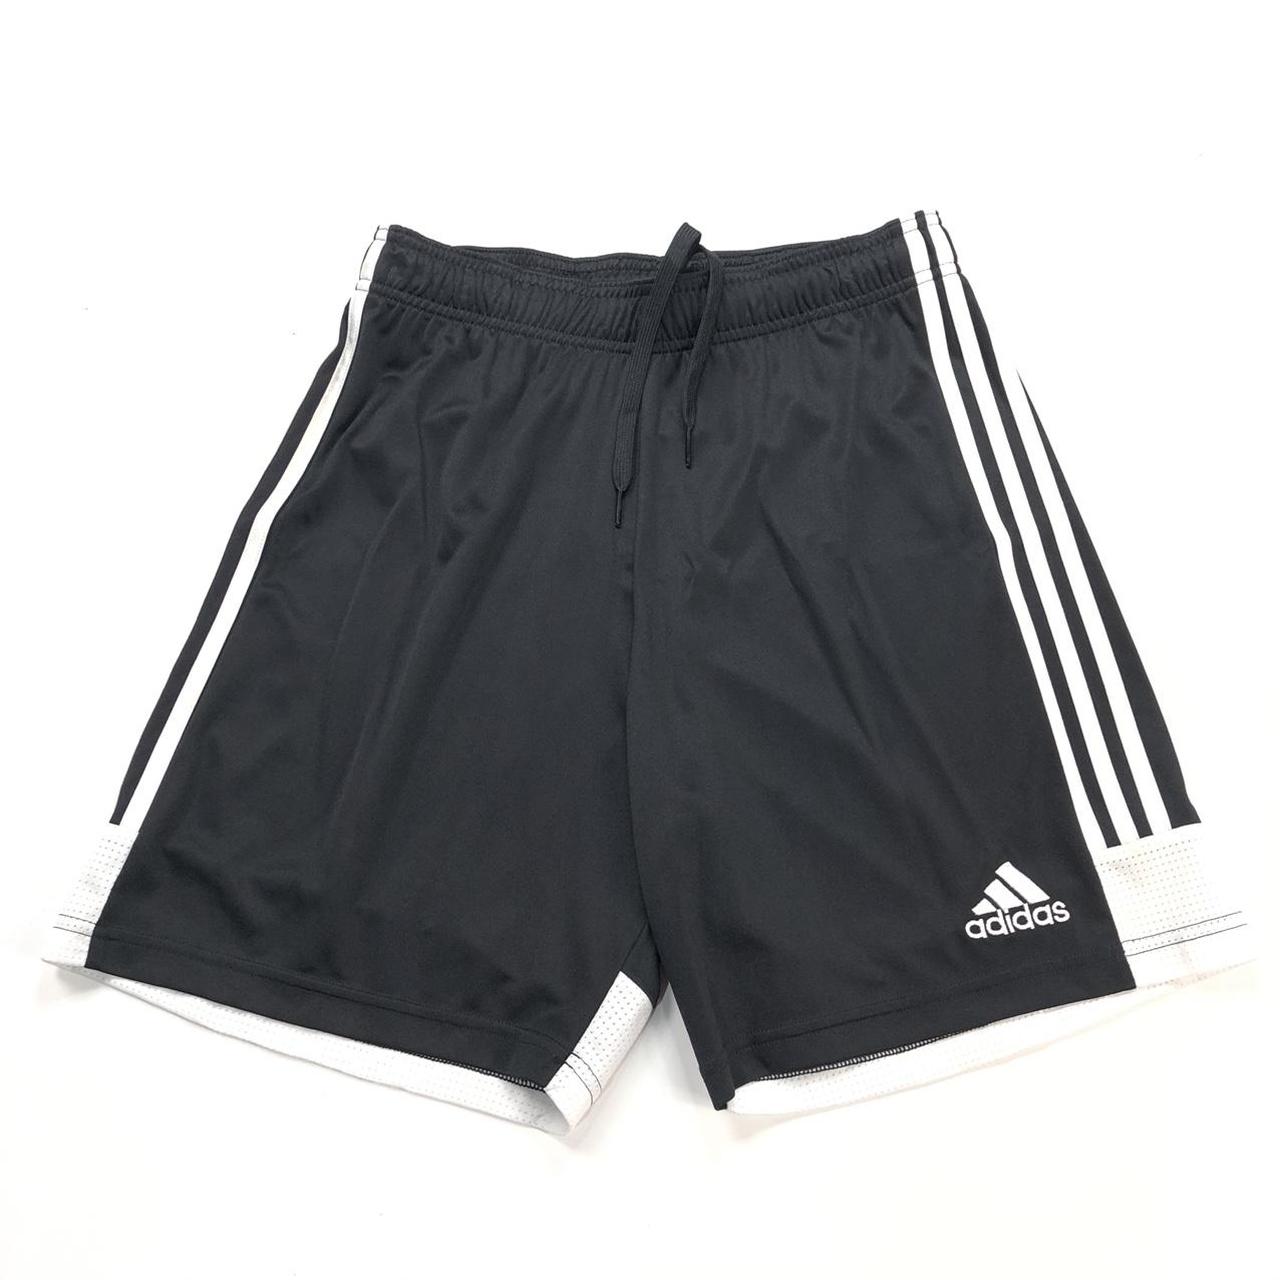 Adidas Men's Black and White Shorts | Depop